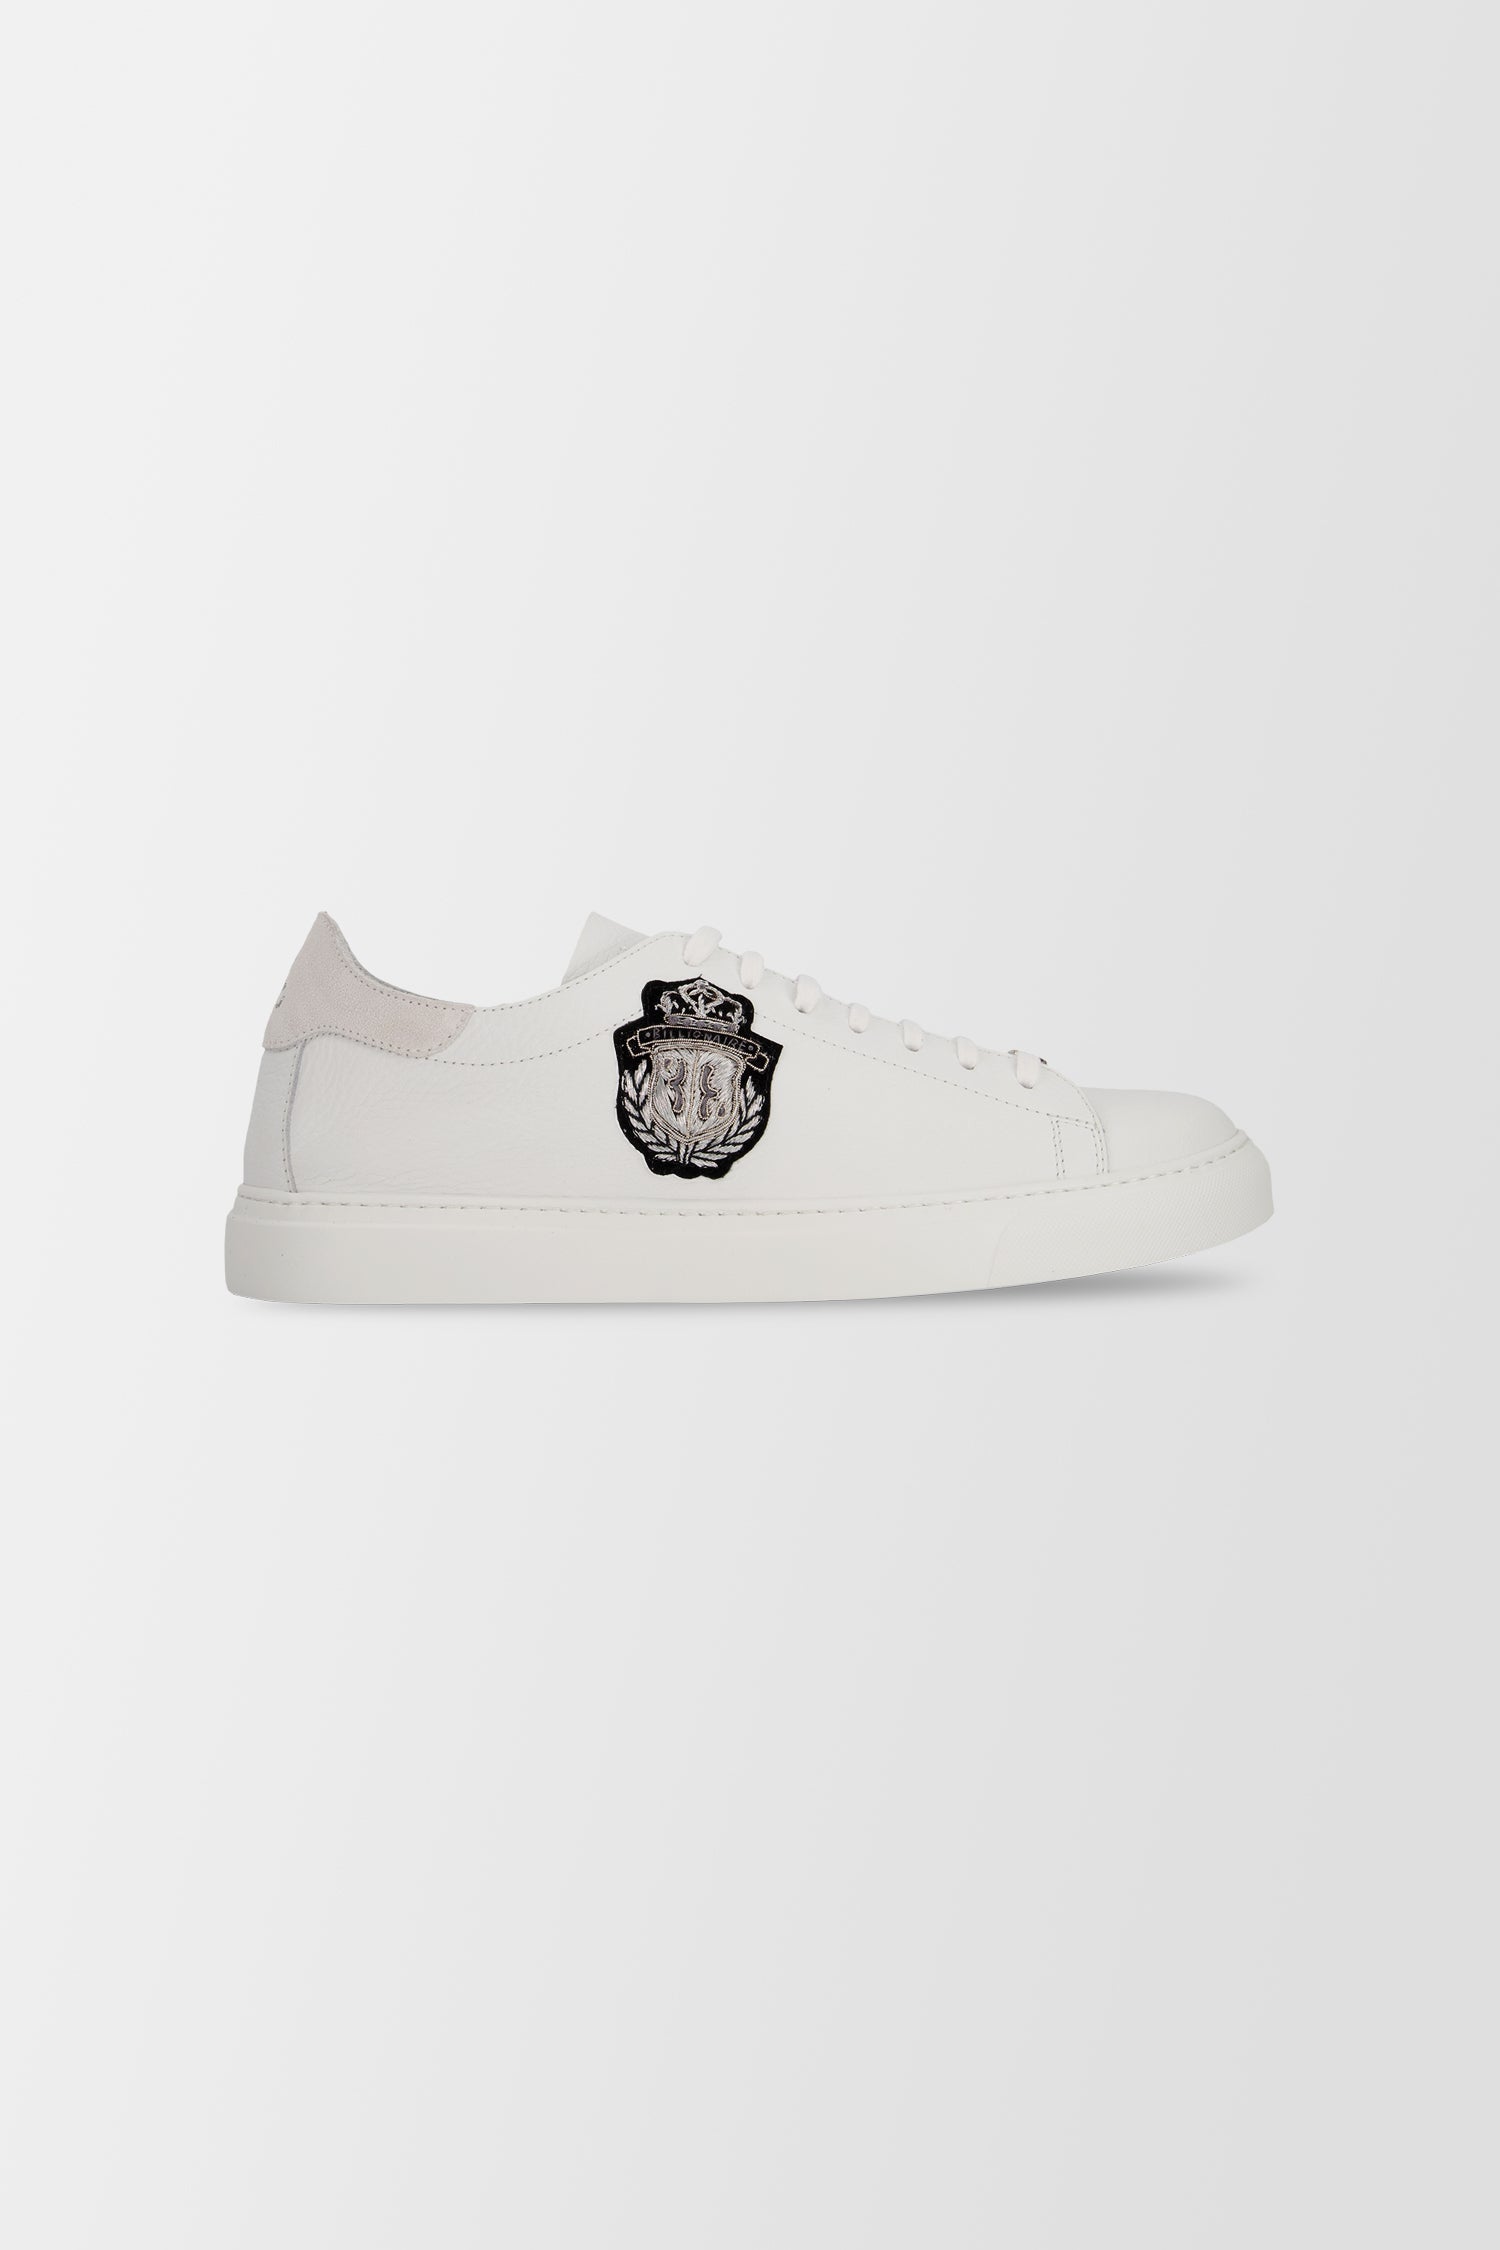 Billionaire Black Crest White Sneakers